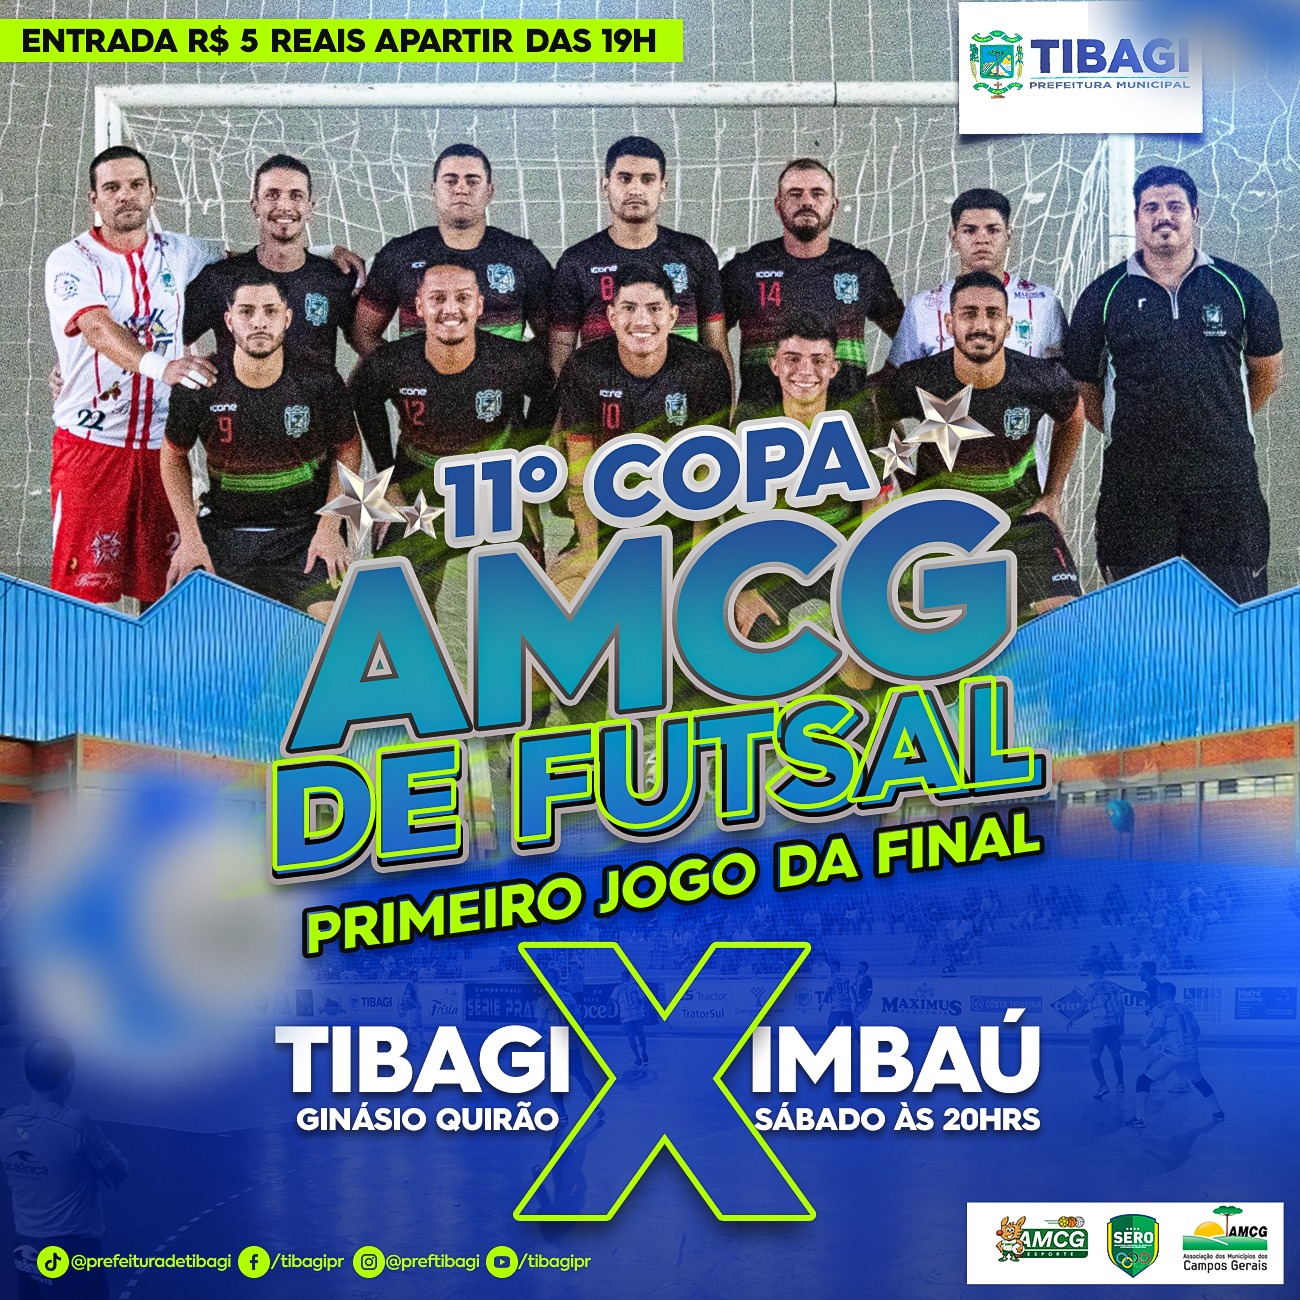 Tibagi disputa final da Copa AMCG de Futsal